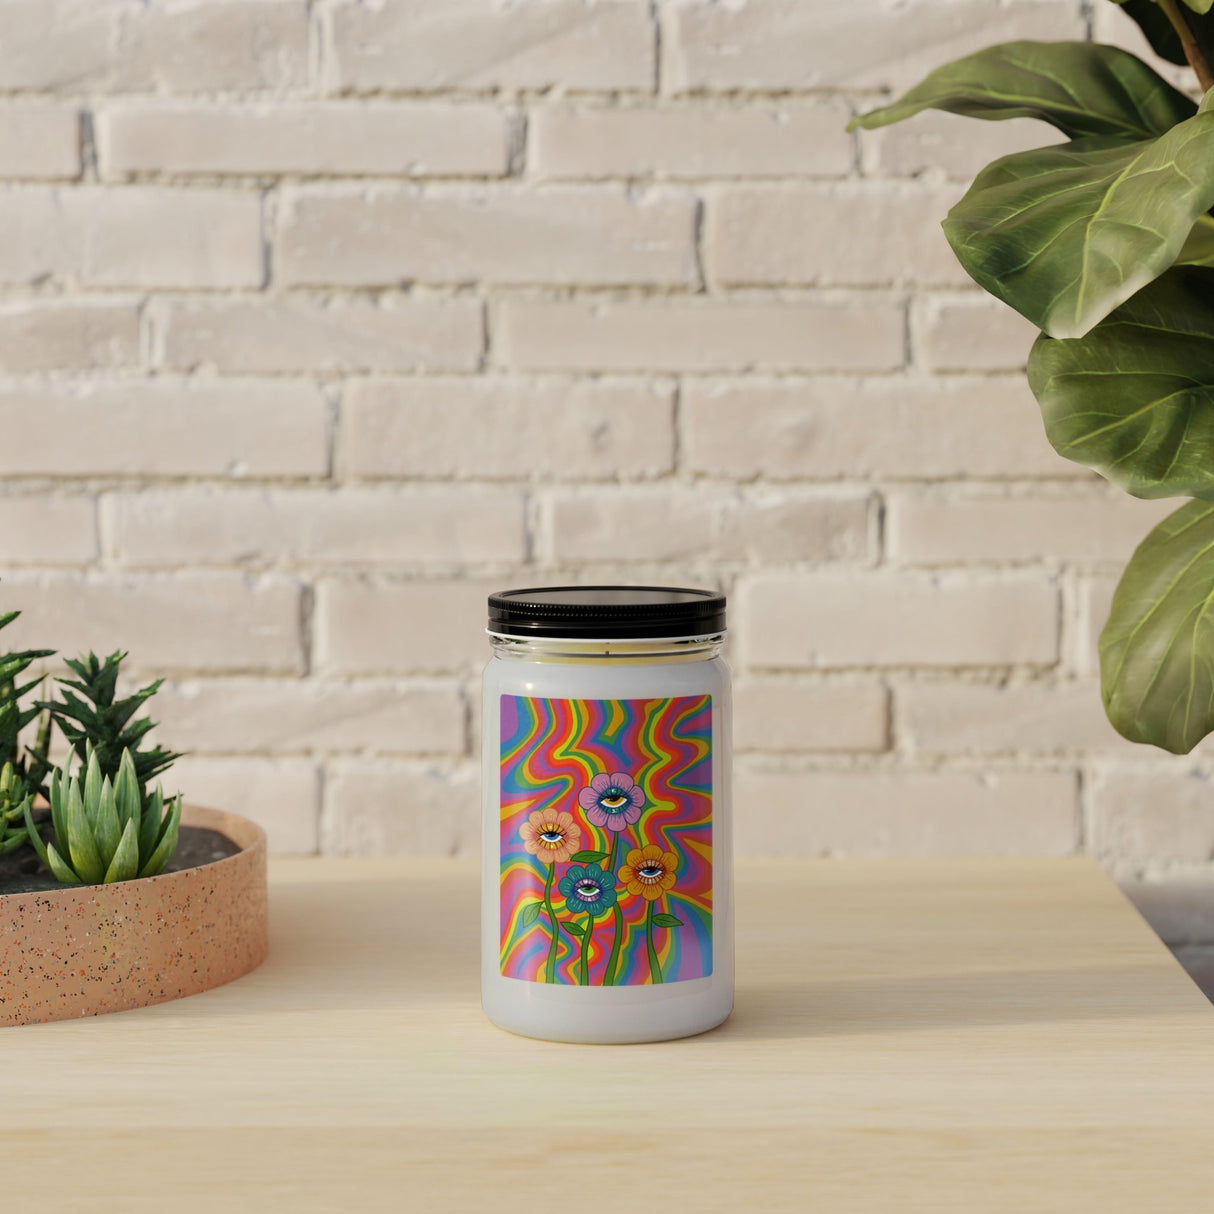 Vivillus Scented Candle in Mason Jar: Rainbow Eye Flowers - Candlefy